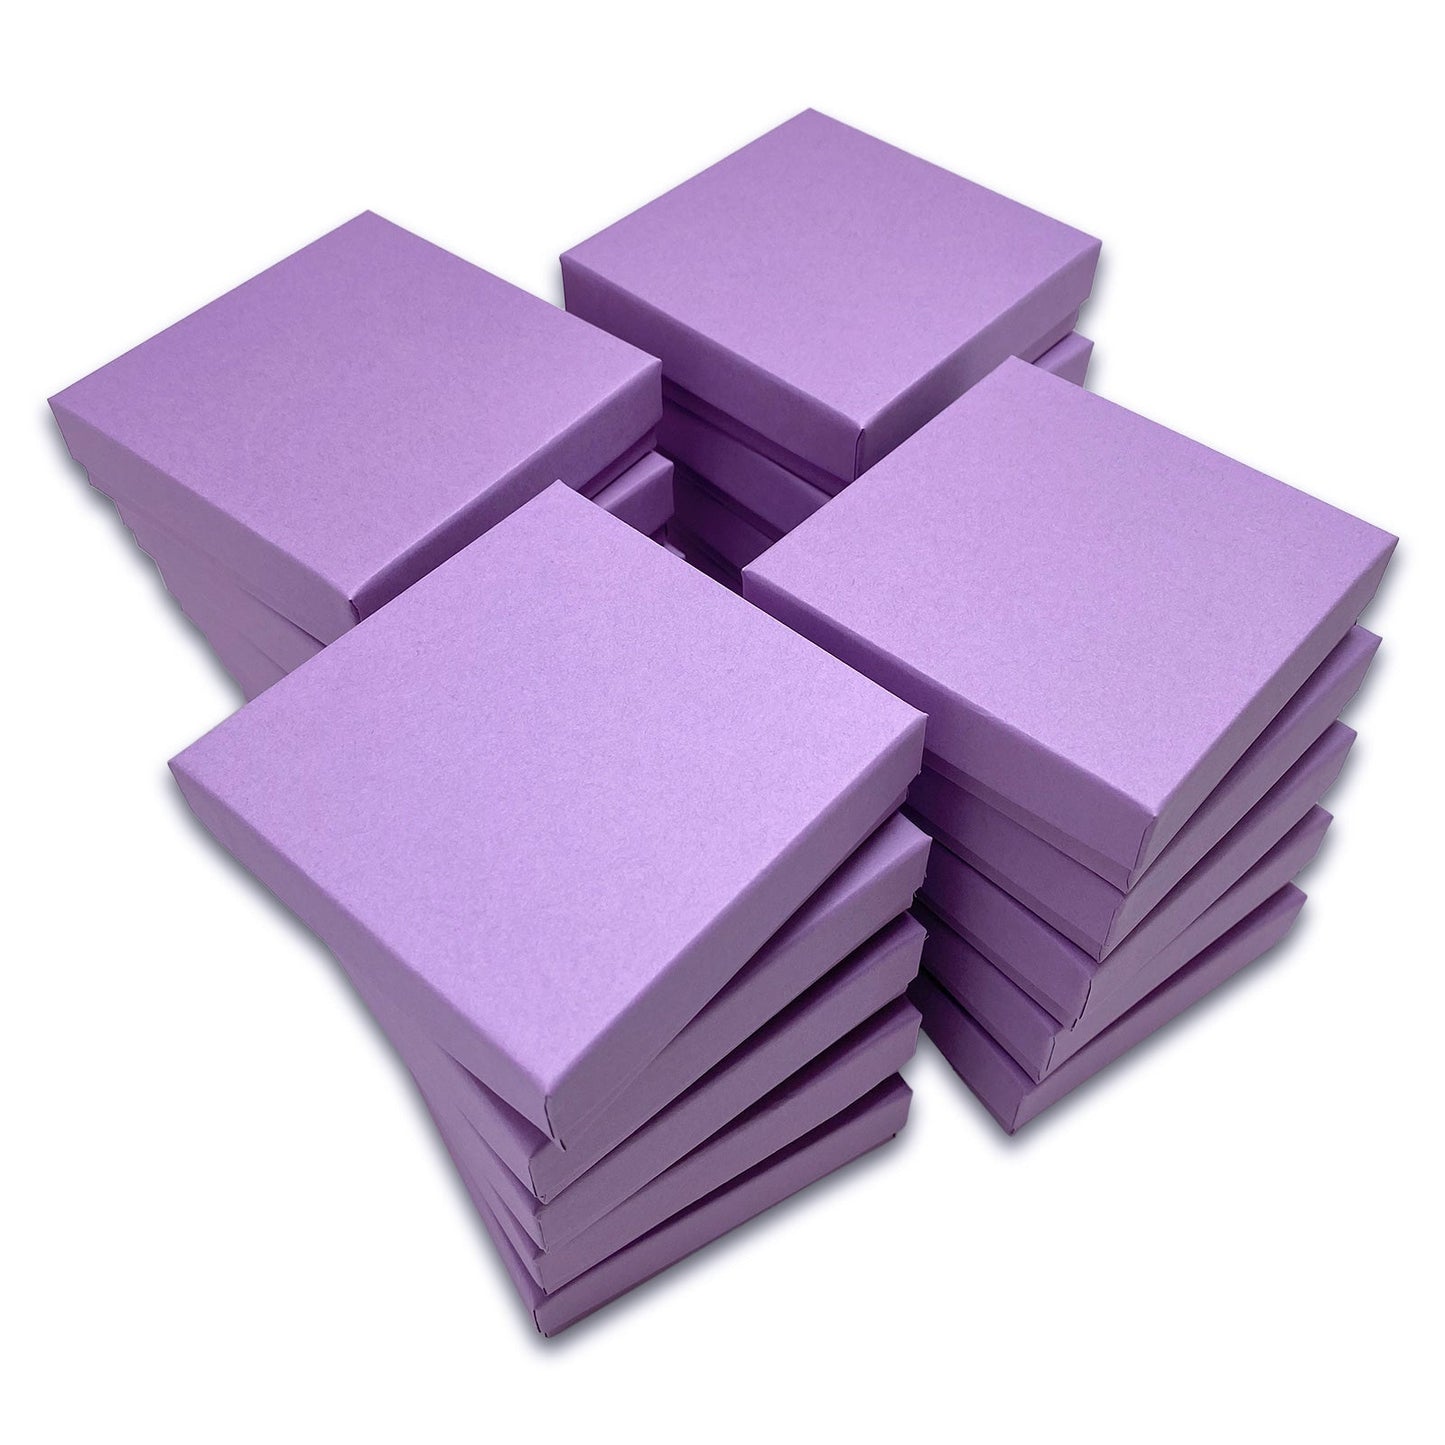 #33 - 3 1/2" x 3 1/2" x 1" Matte Purple Cotton Filled Paper Box